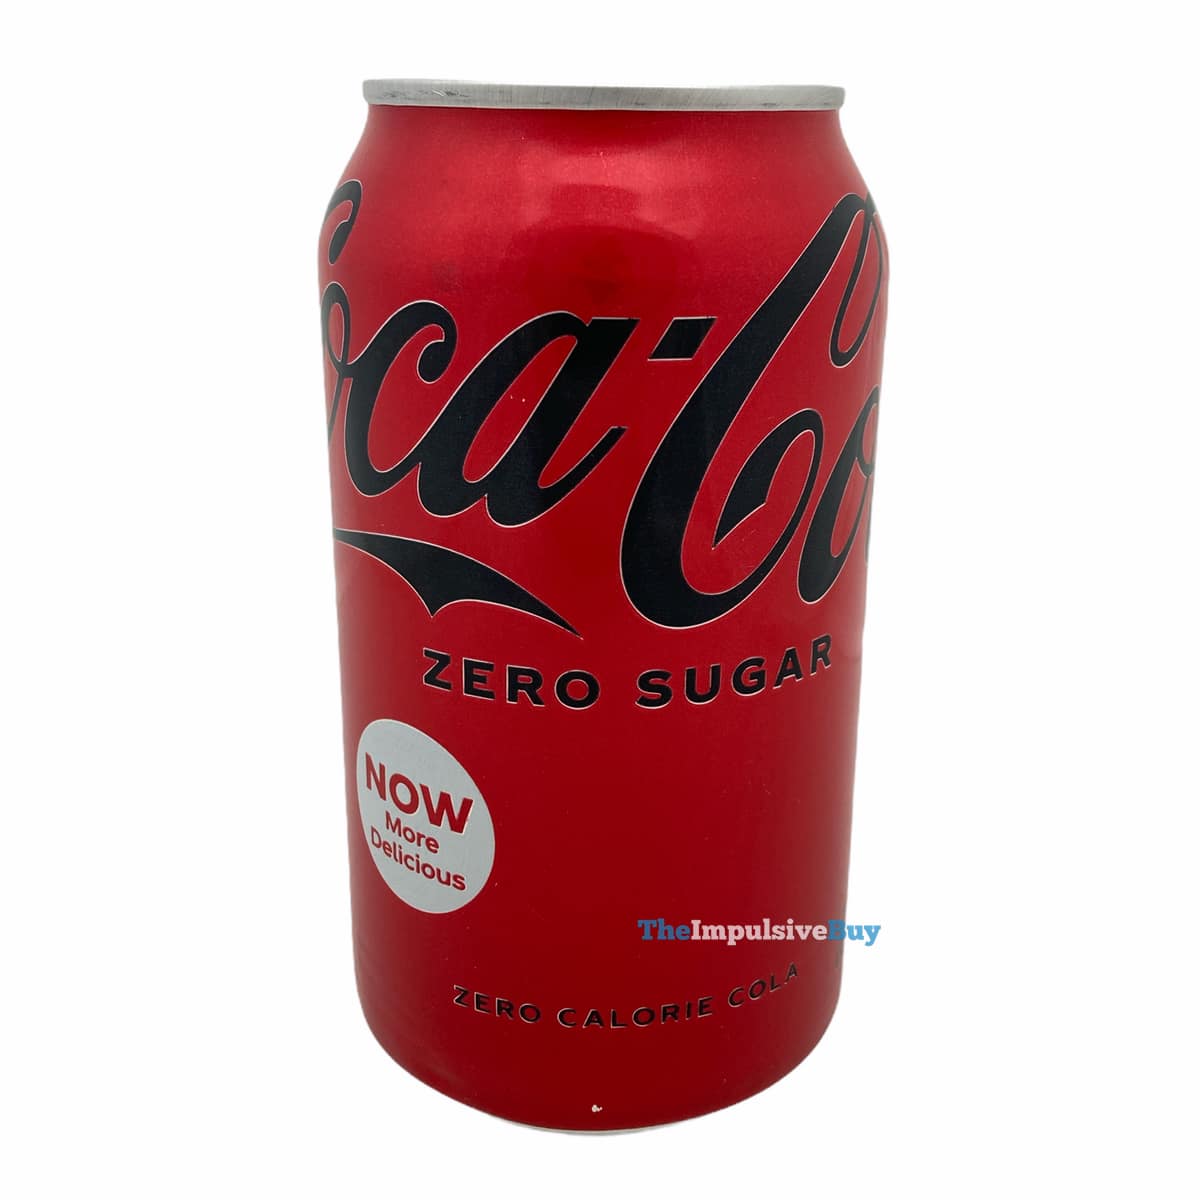 REVIEW: Coca-Cola Zero Sugar (2021) - The Impulsive Buy